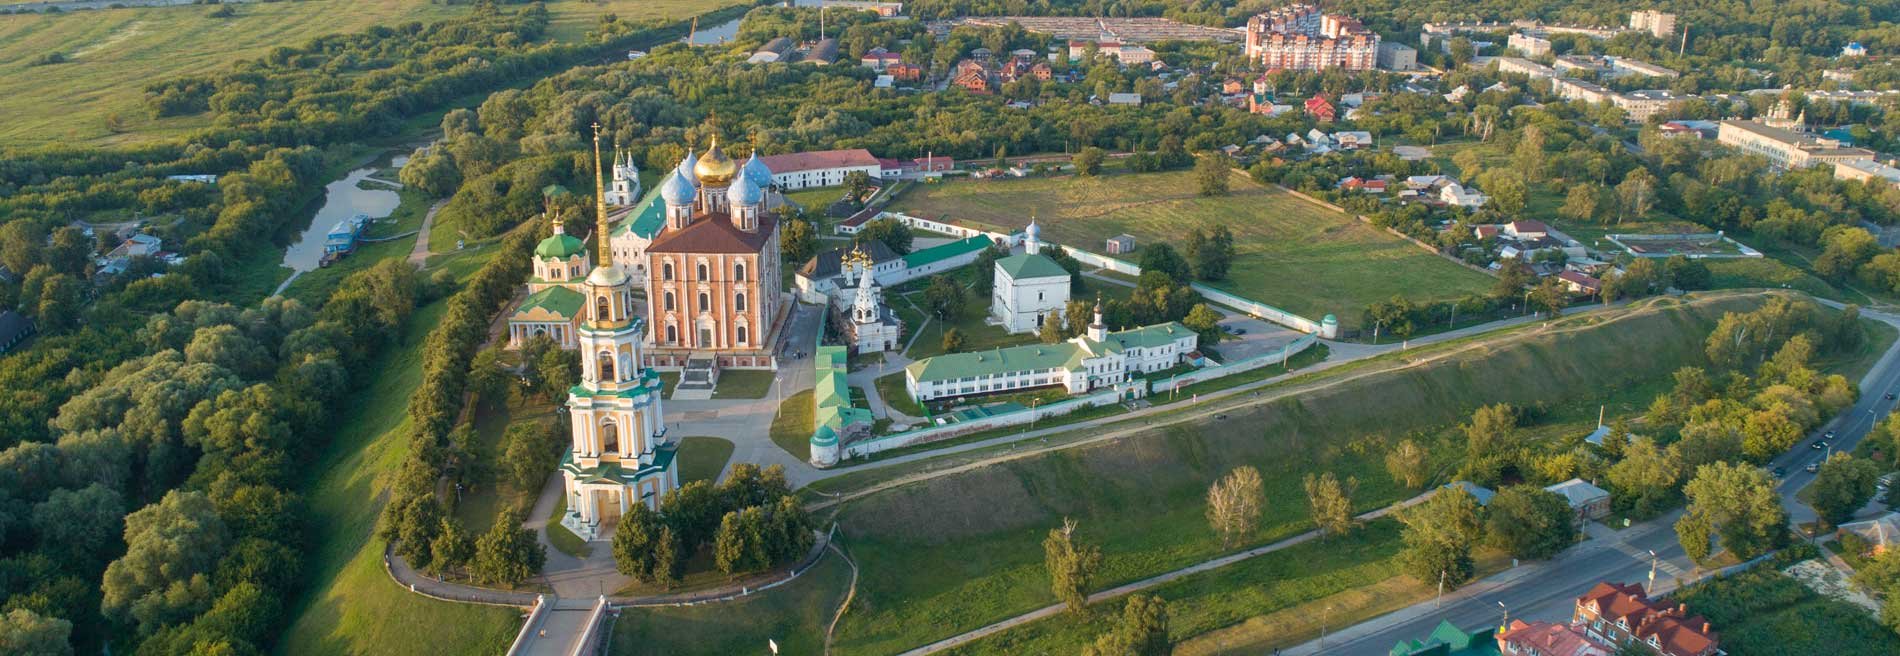 Рязань: «архитектурная» прогулка по кремлю